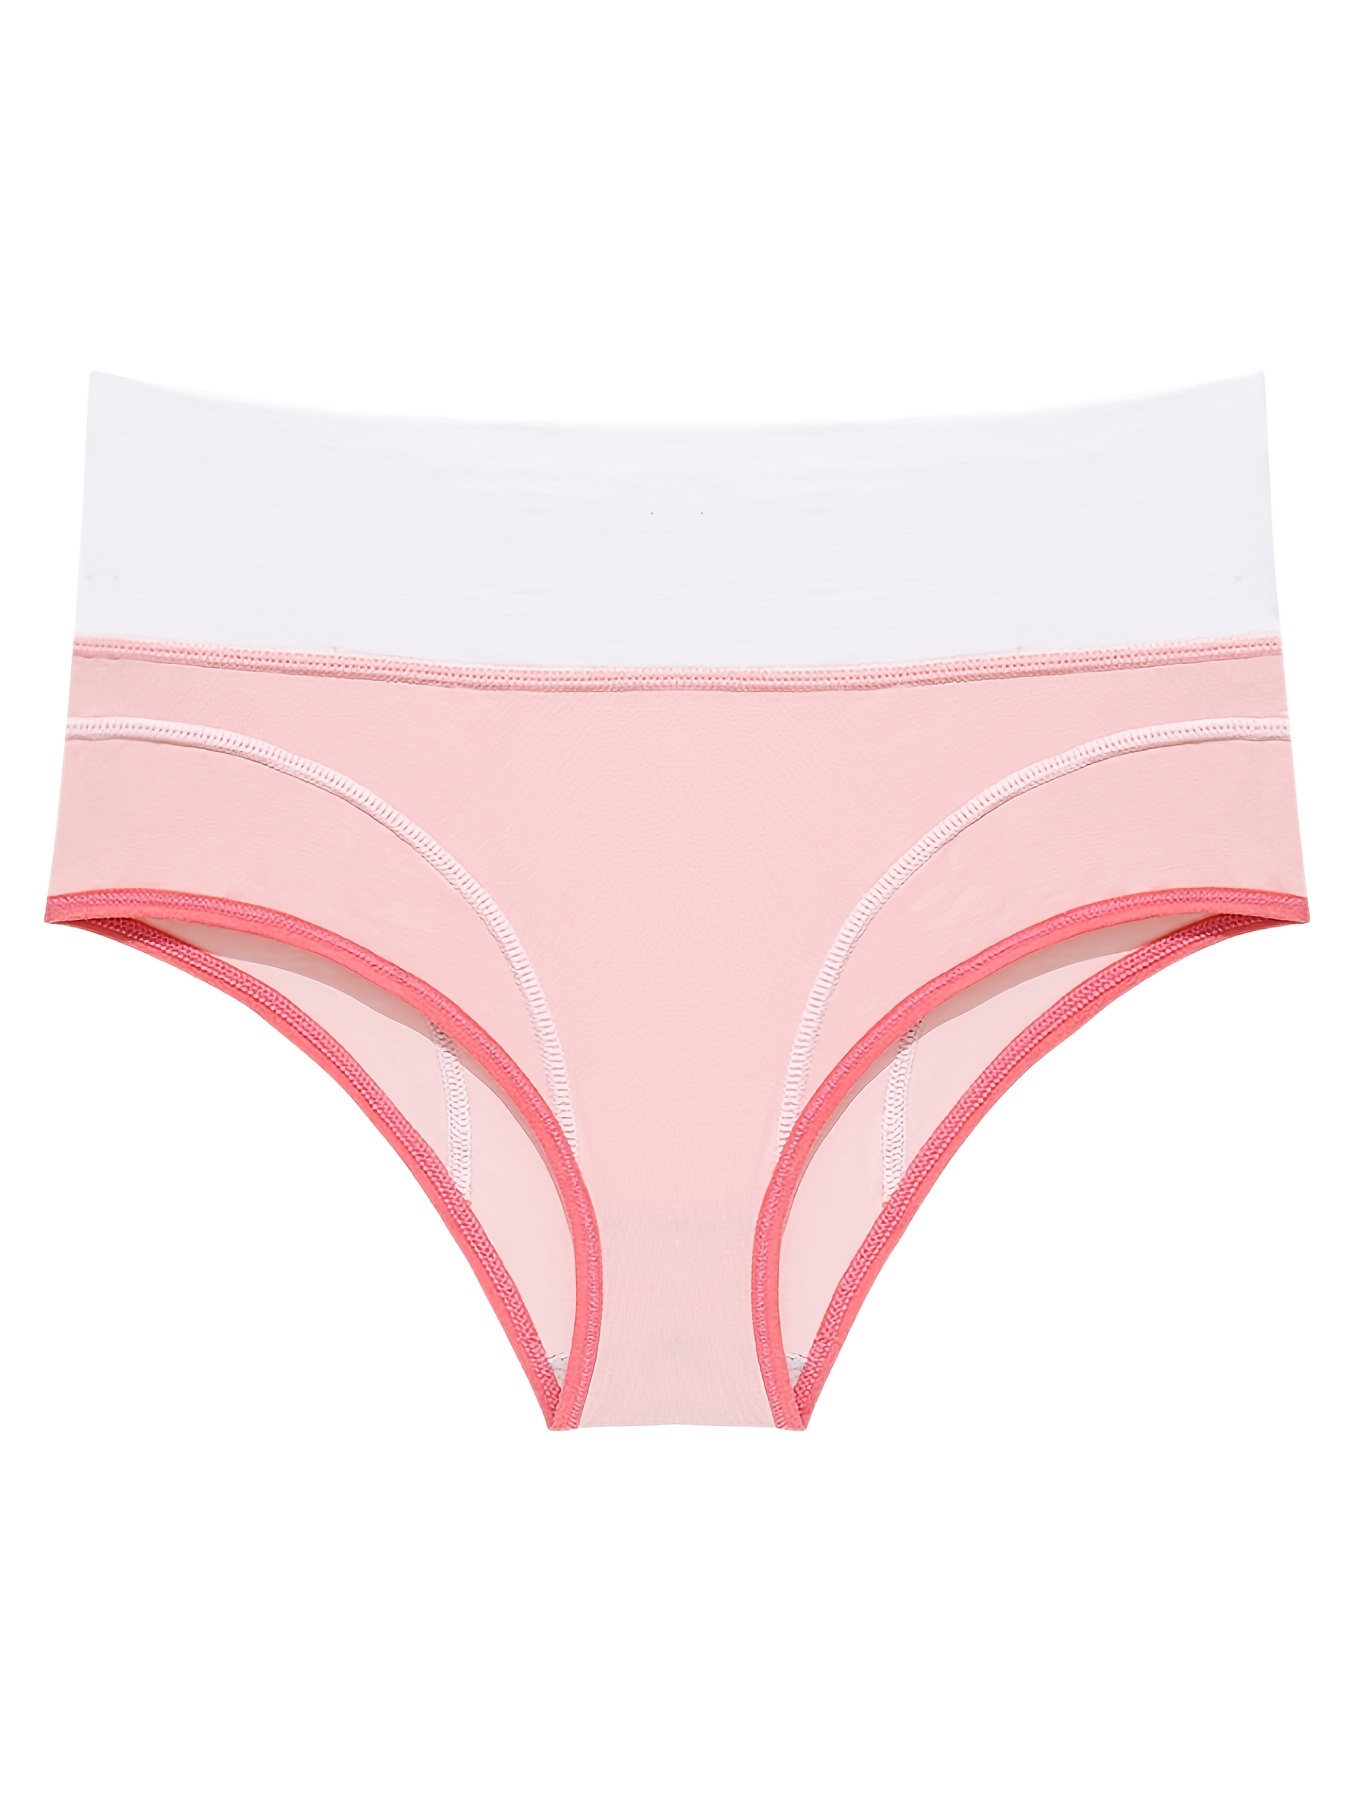 1pcs Free Shipping Women's briefs low-waist sexy pink young girls